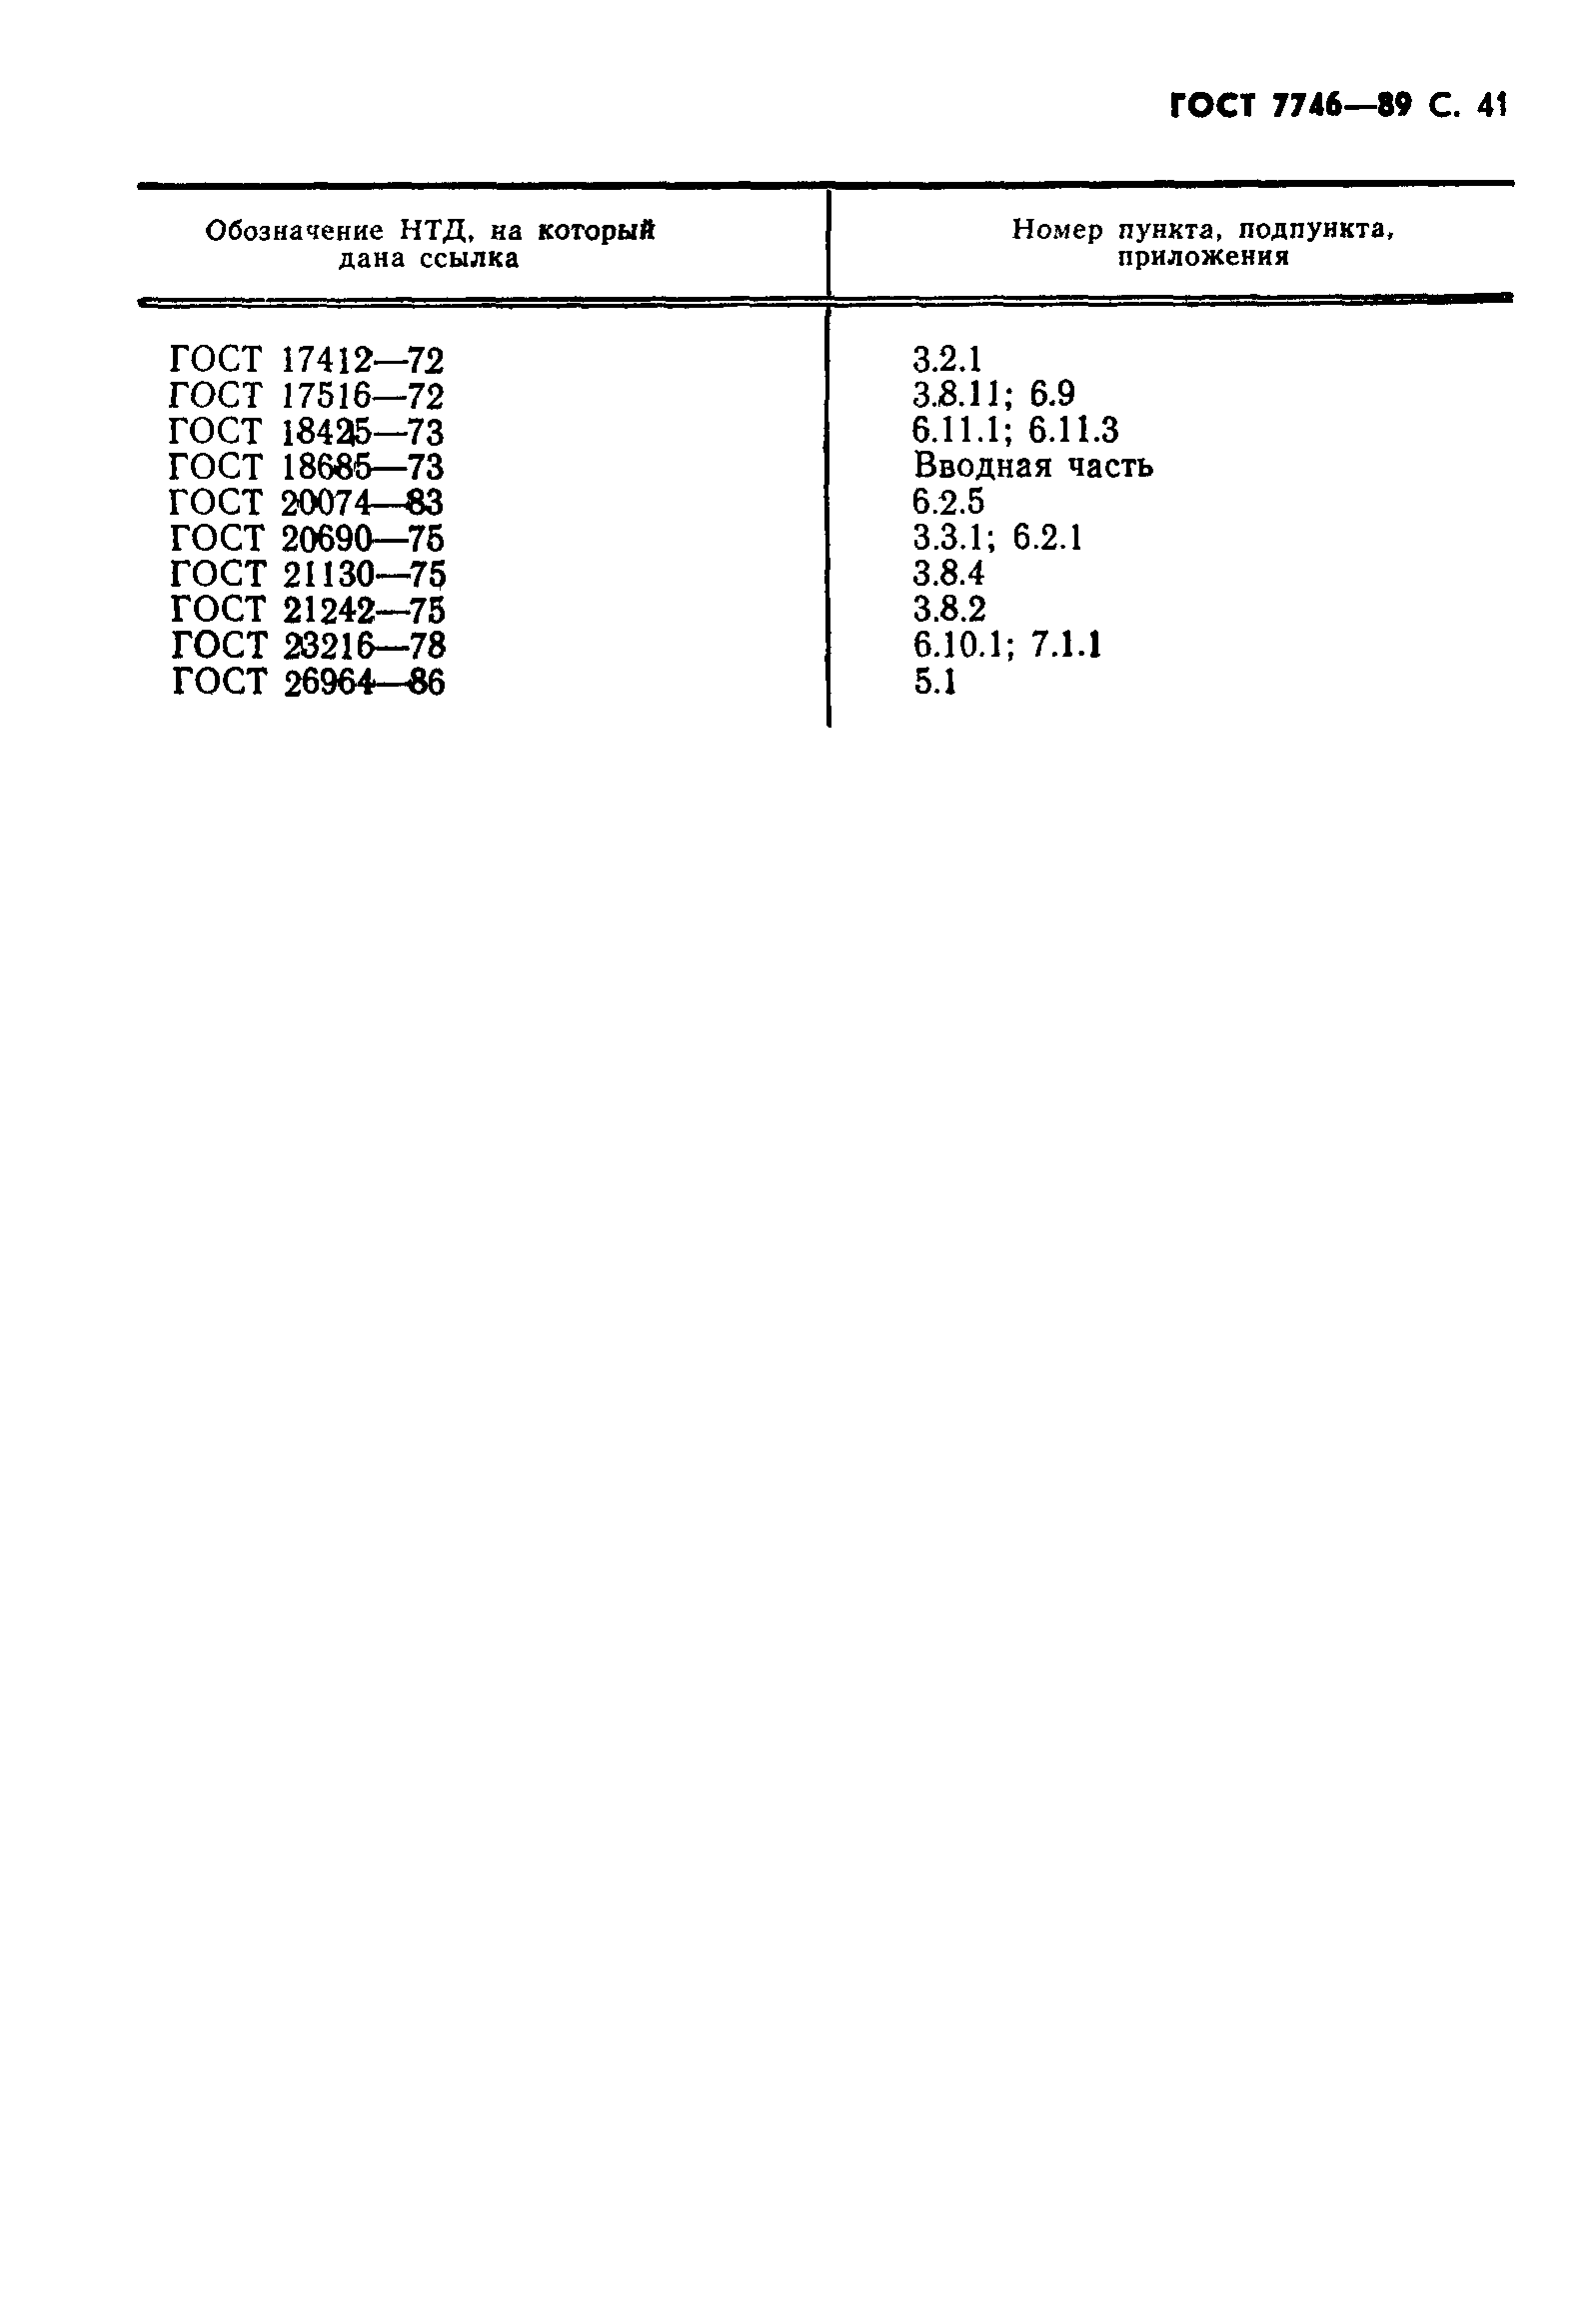 ГОСТ 7746-89